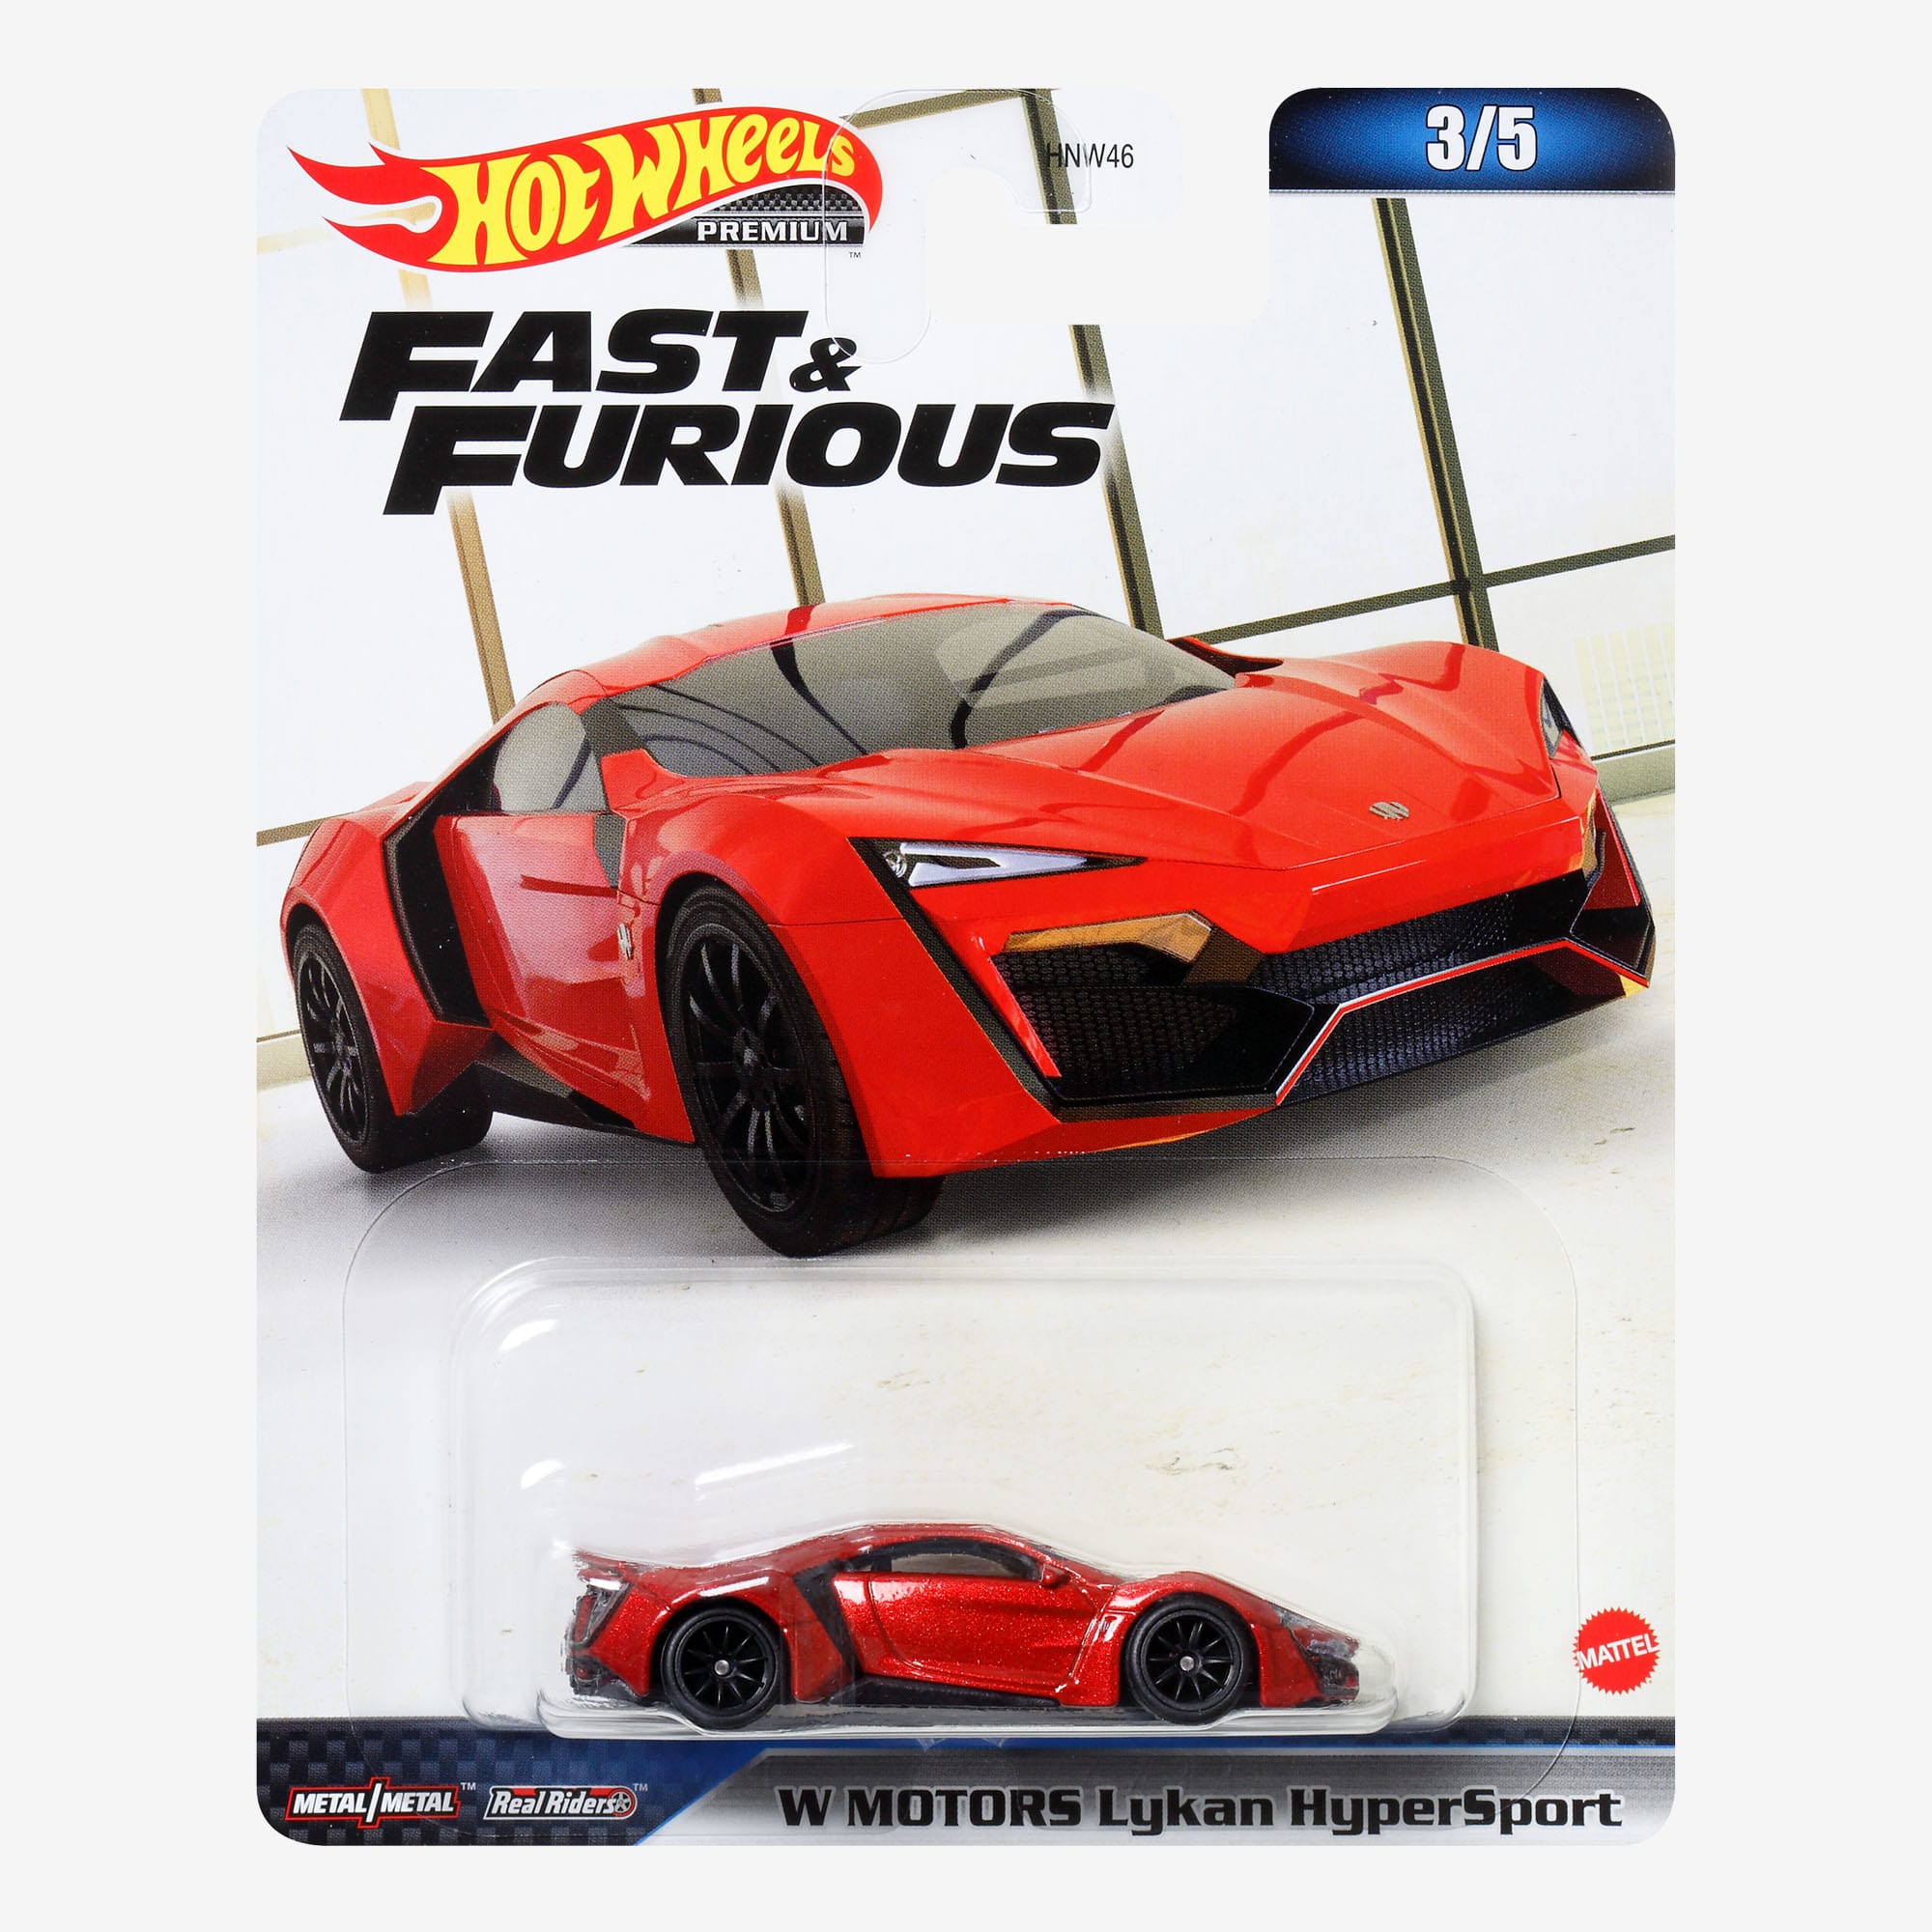  Hot Wheels Fast & Furious 5 Premium All-Metal Castings